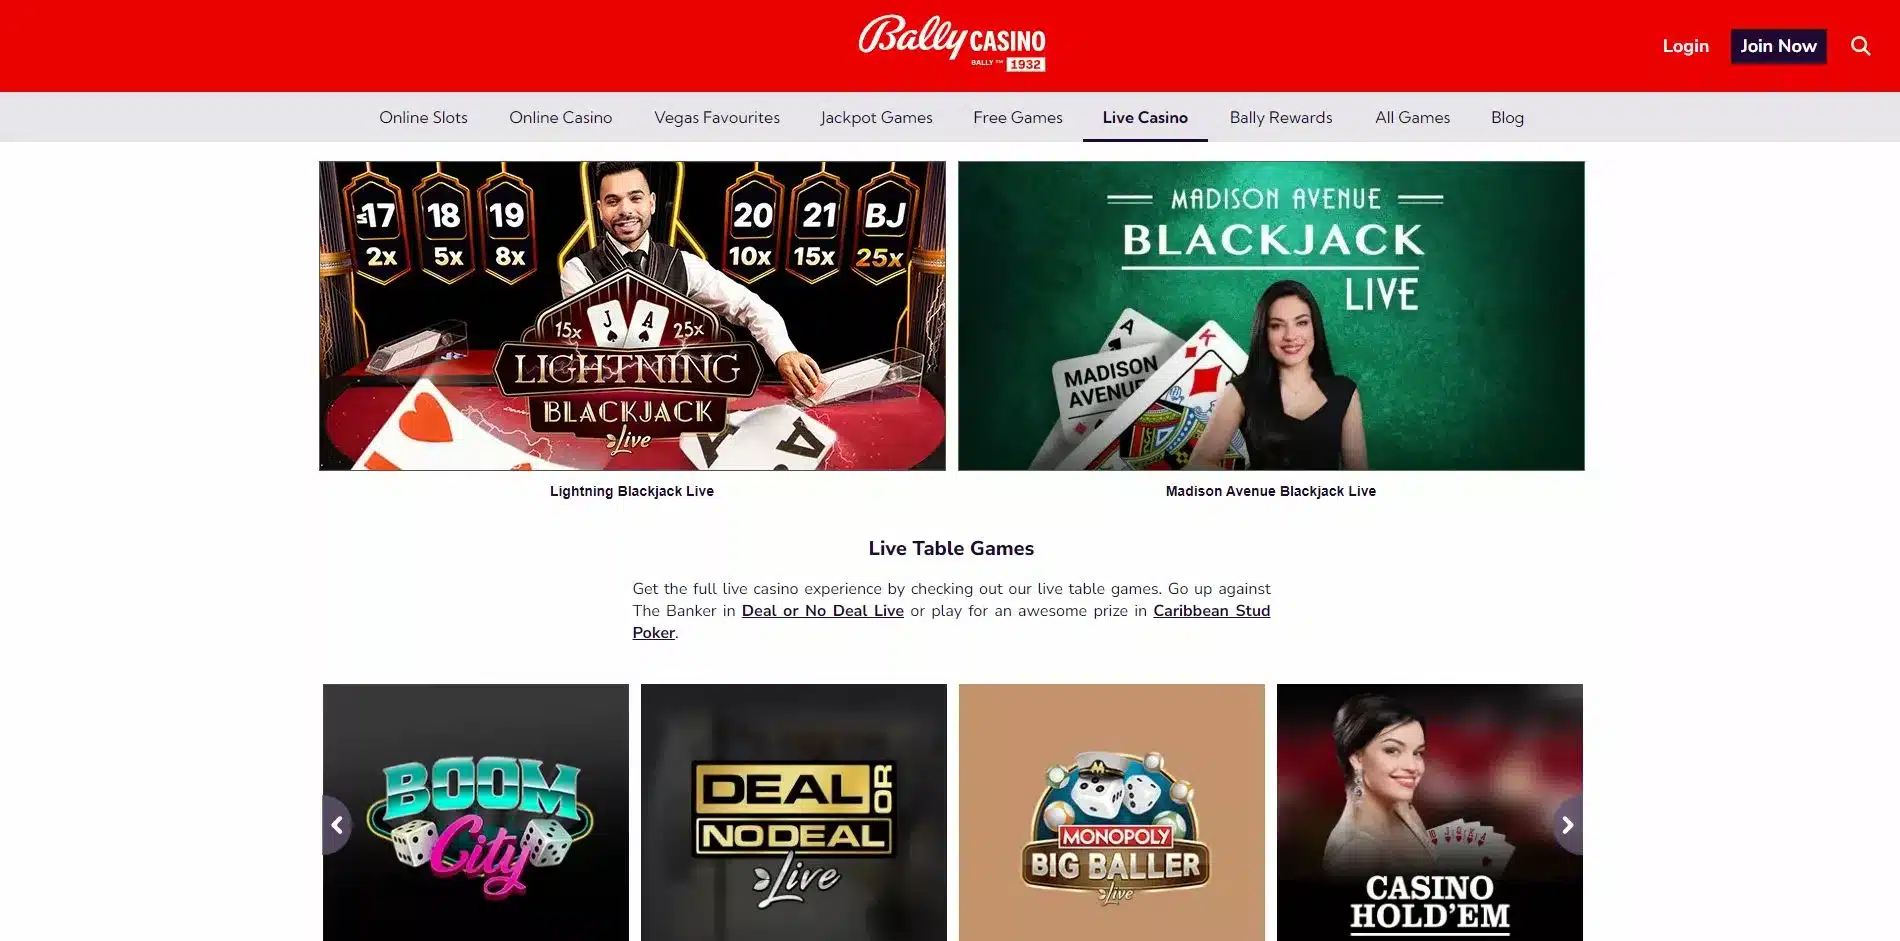 Bally Live Casino